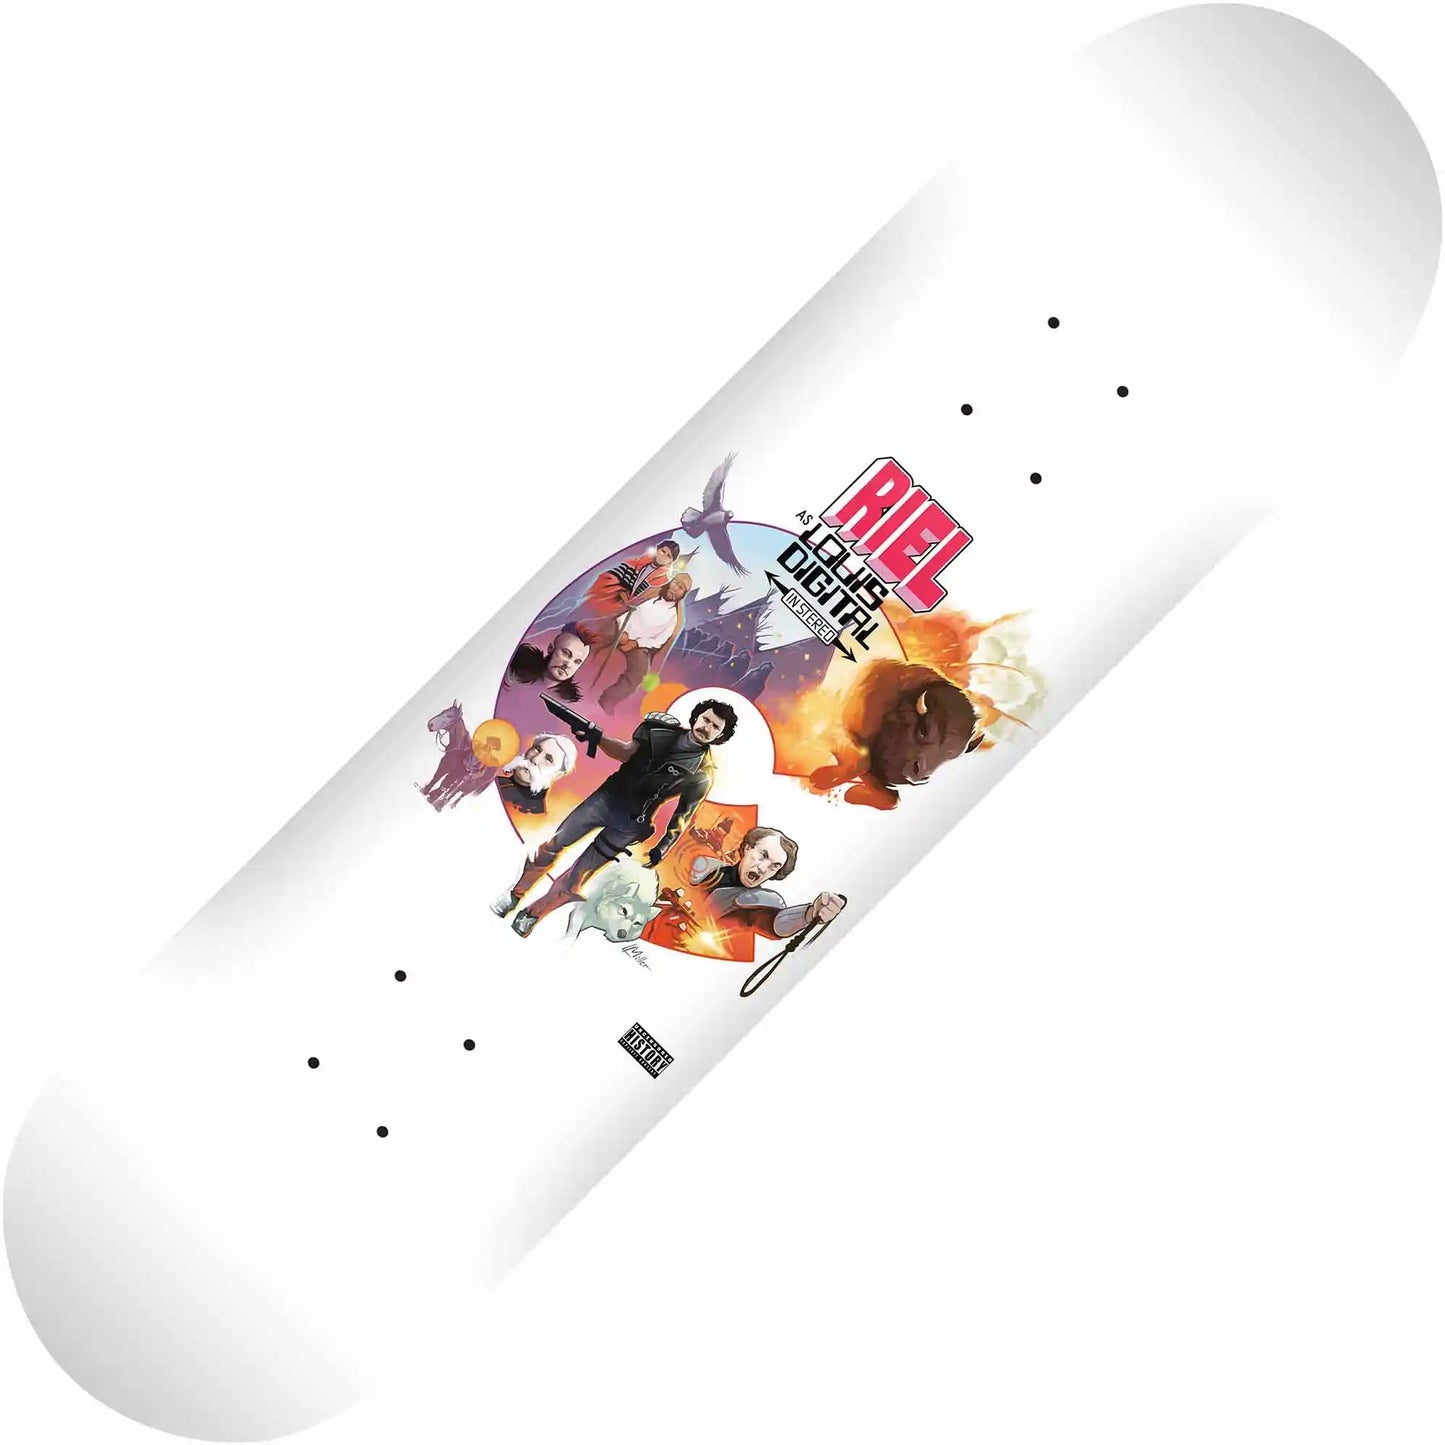 Colonialism Louis Digital Reissue Deck (White) (8.0") - Tiki Room Skateboards - 1